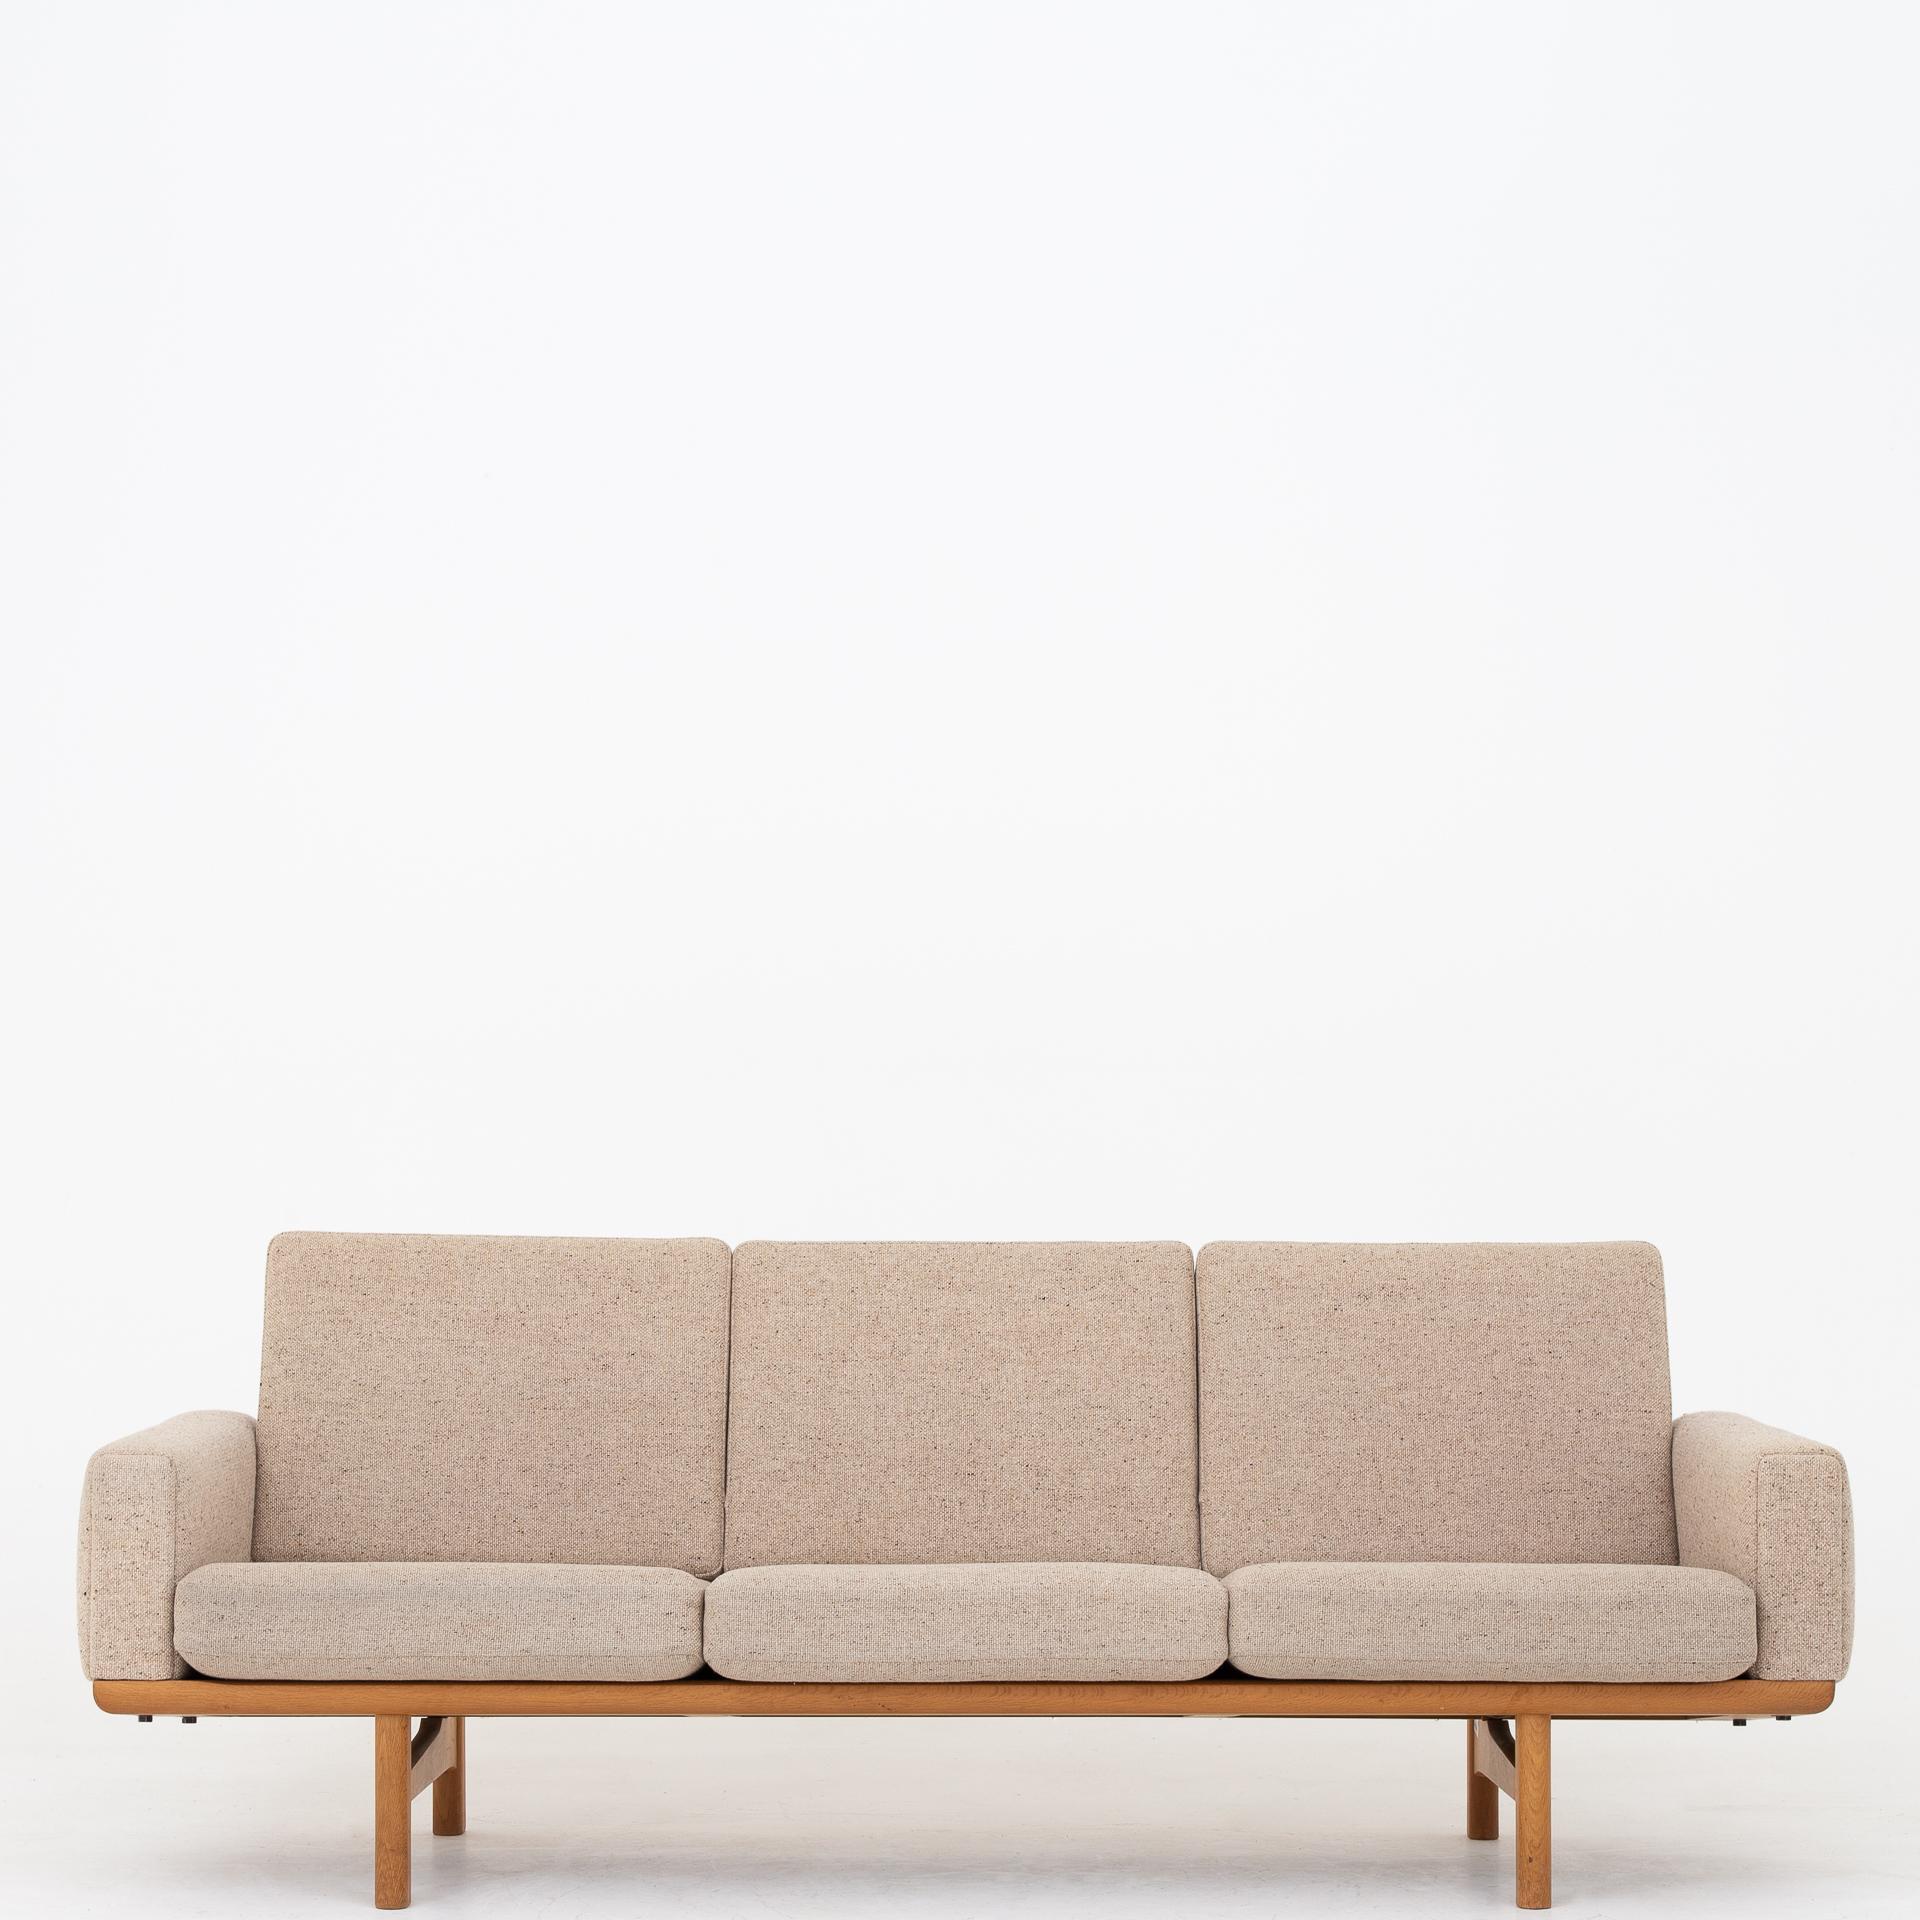 GE 236/3 Sofa in Oak by Hans J. Wegner 1